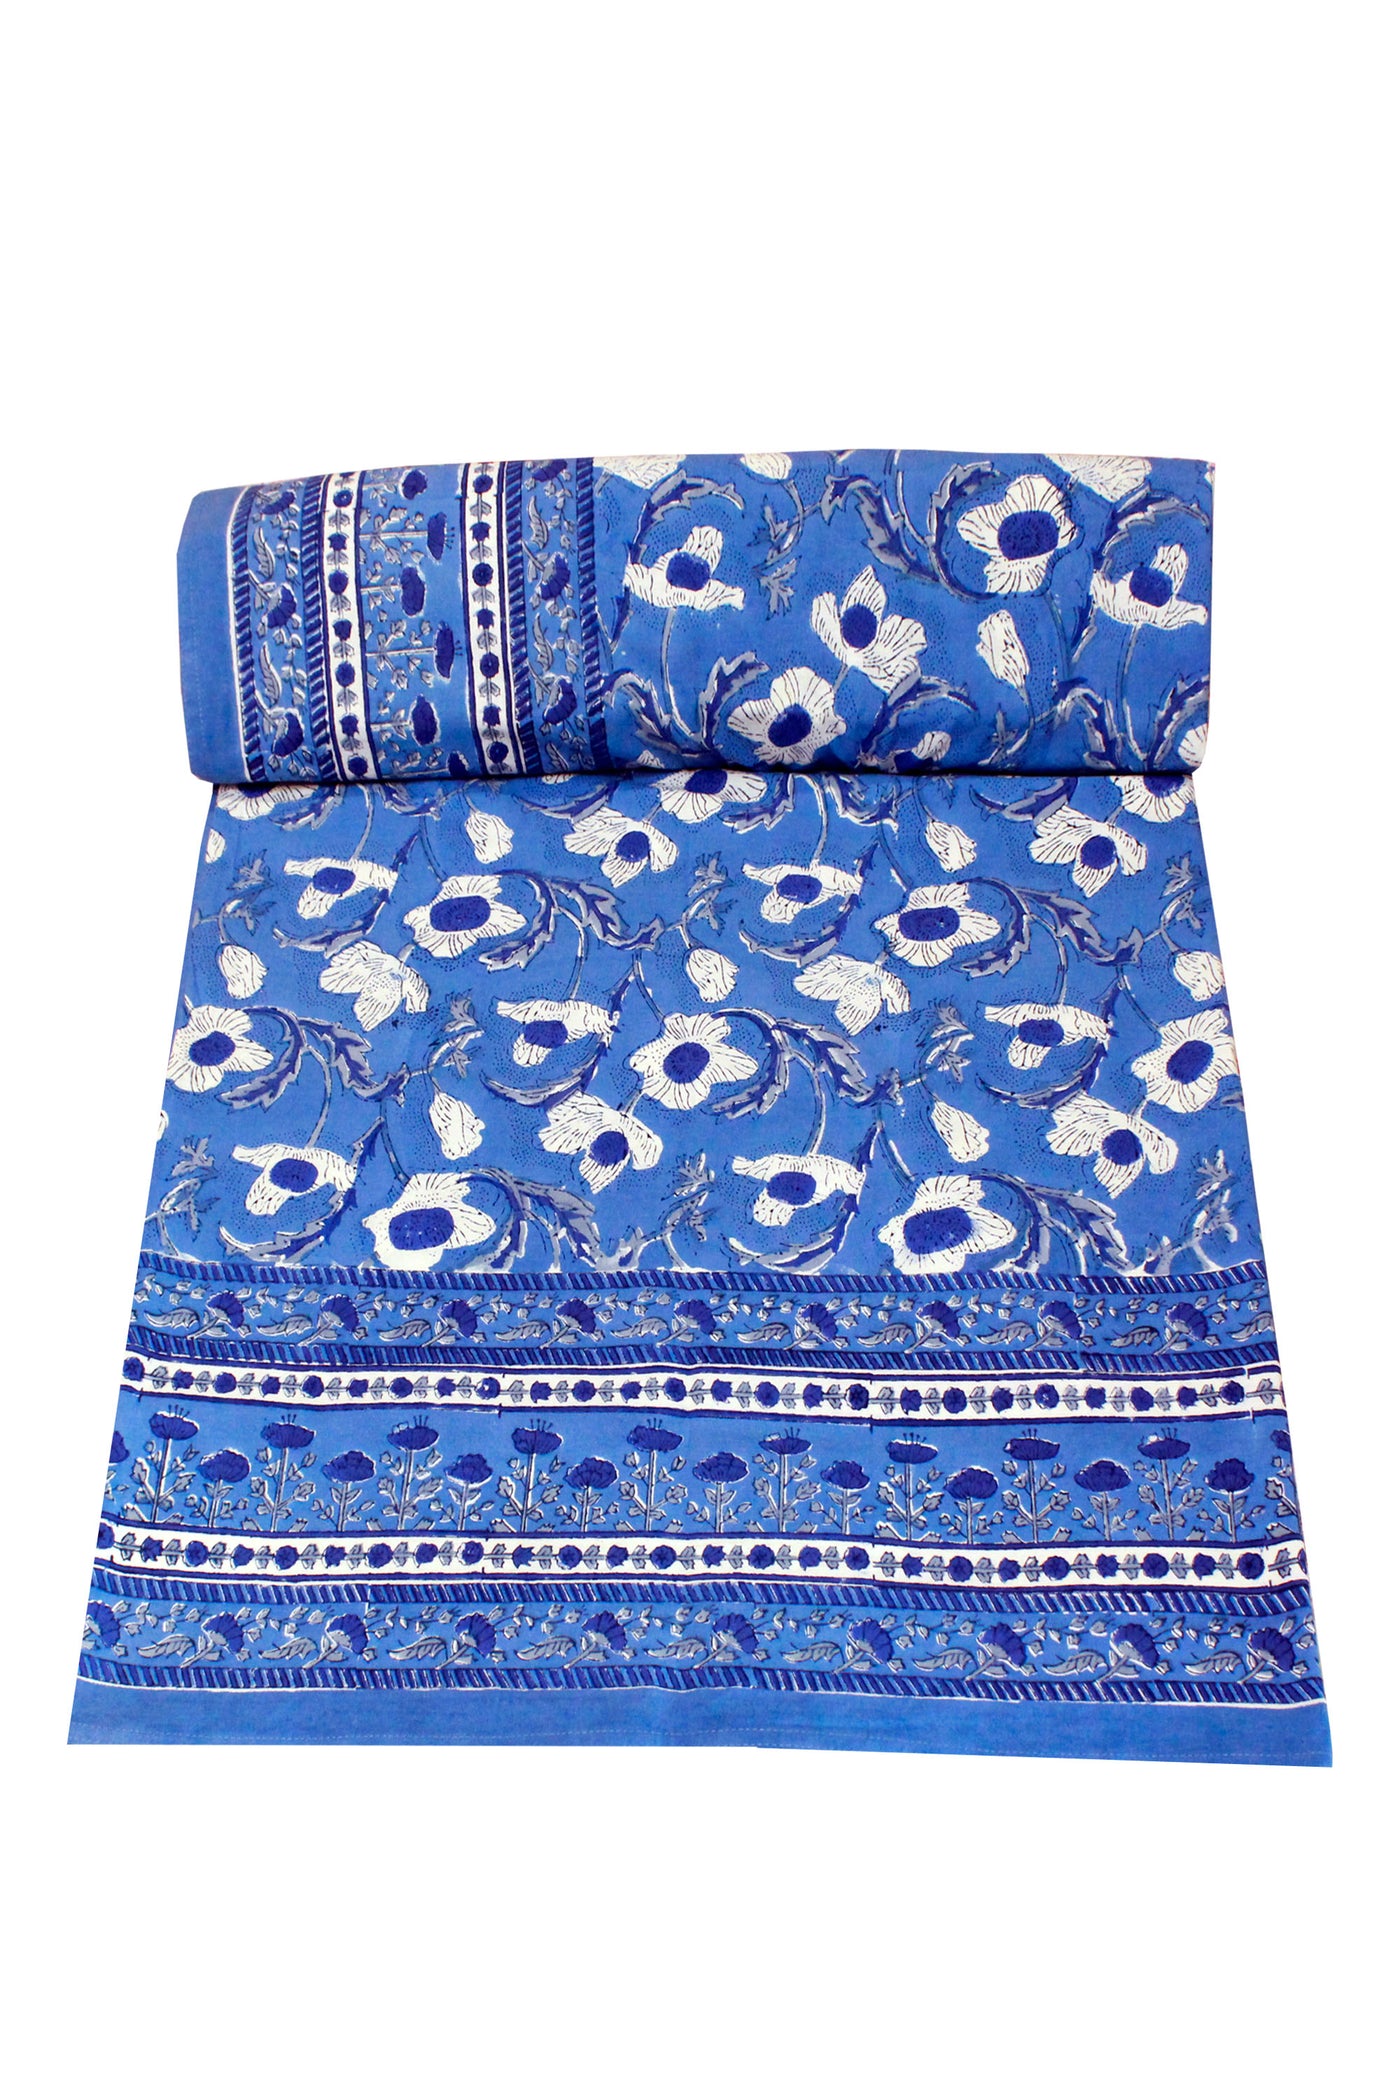 Cotton Floral Jaal  Block Print Bedsheet in Mid Blue